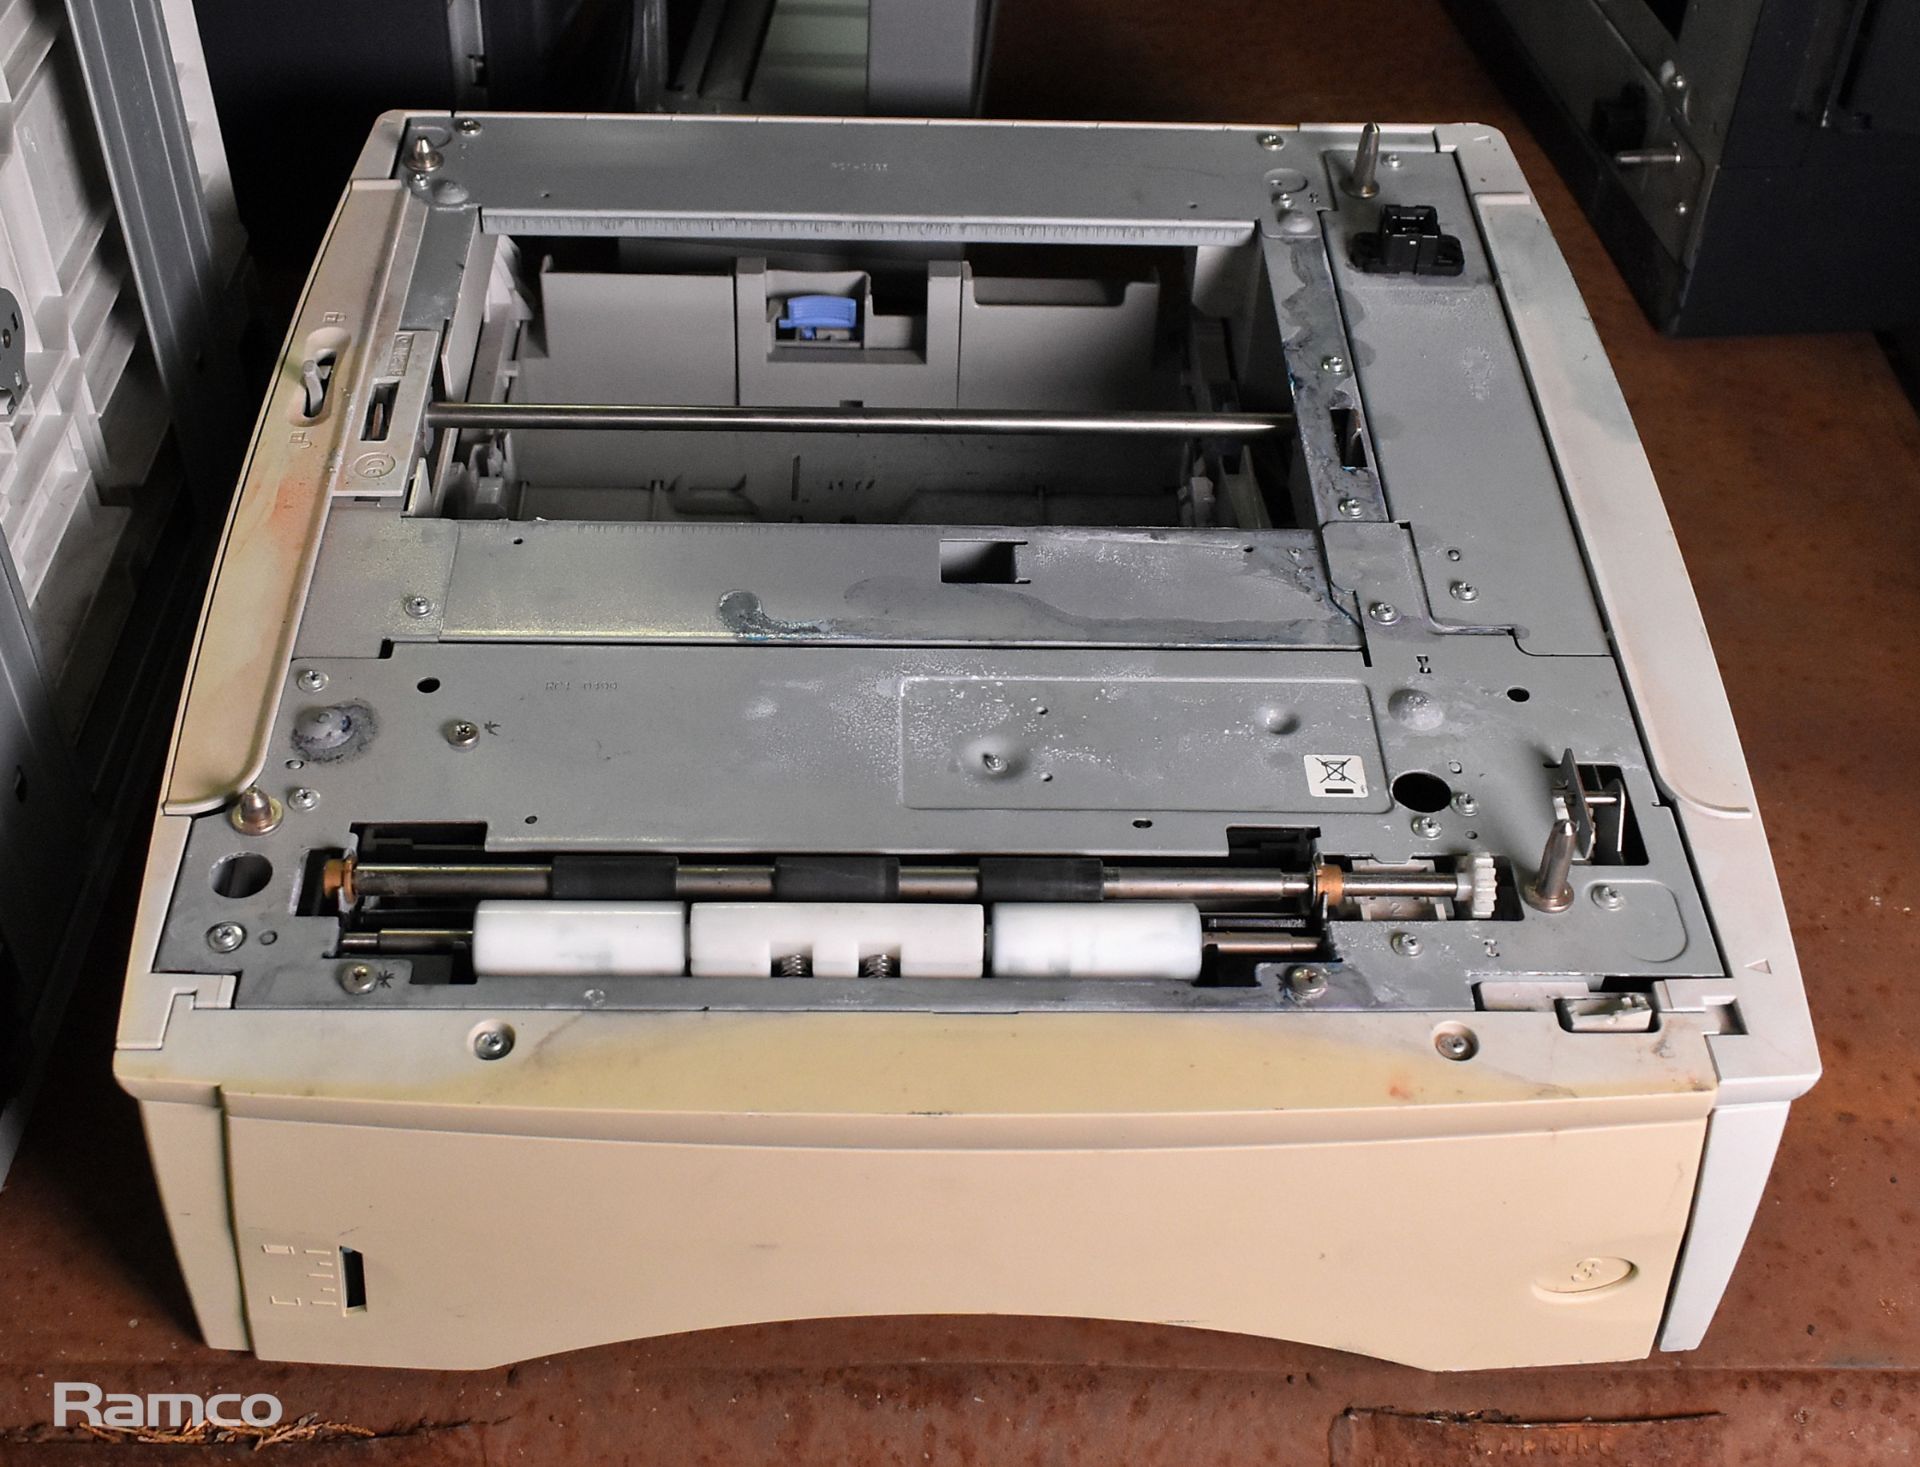 2x HP Q6504A LaserJet 3050 All-in-One printers, HP LaserJet 3050 All-in-One printer - Image 7 of 10